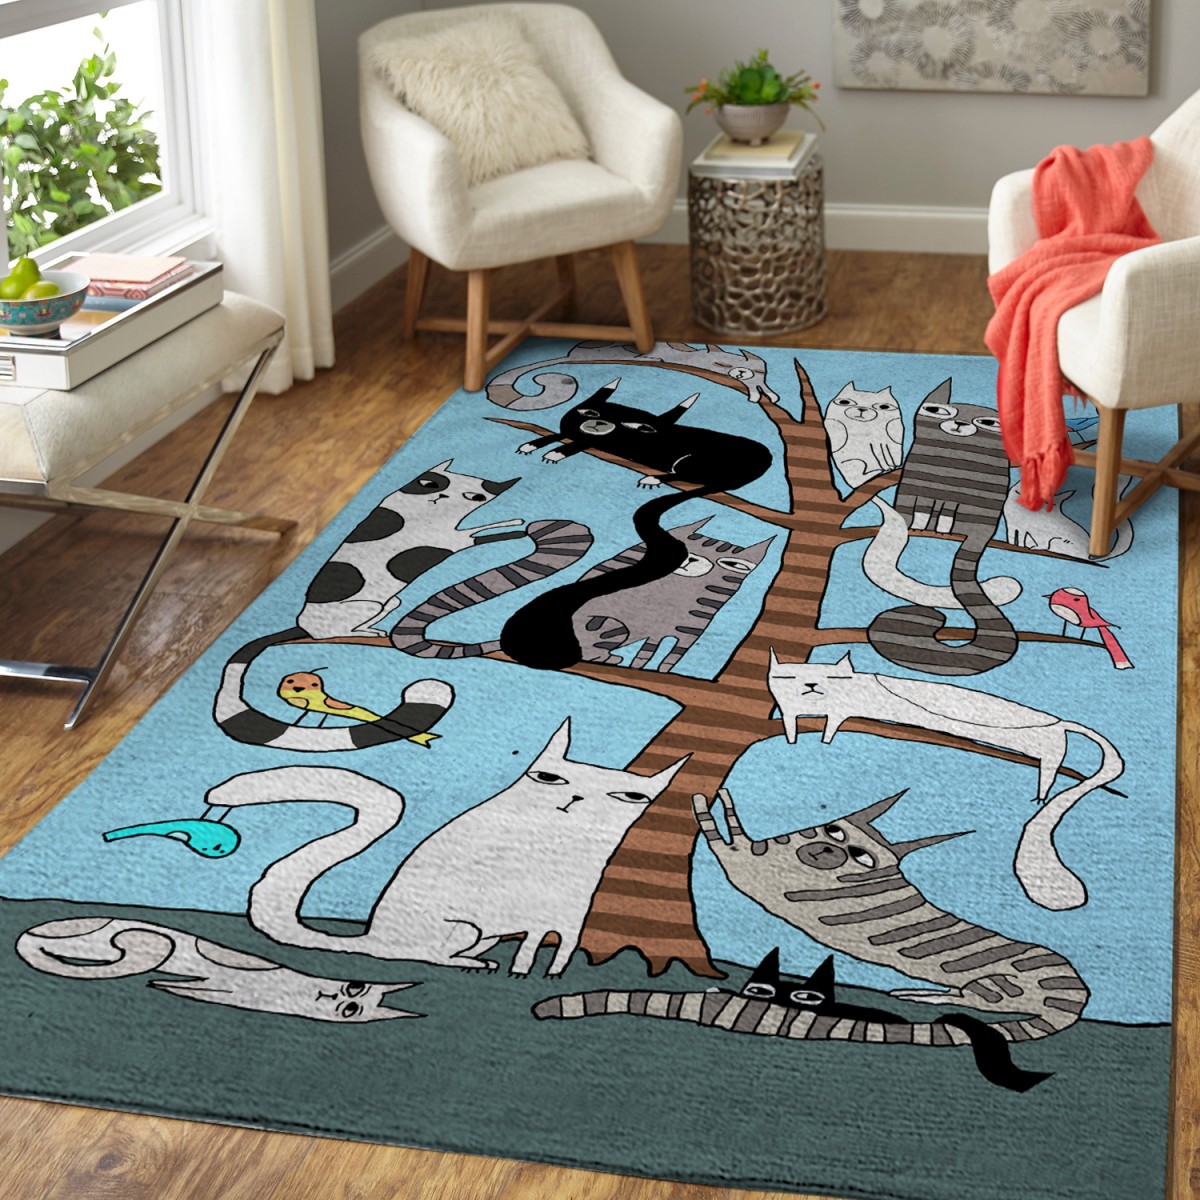 Cute kitty cats rug 4